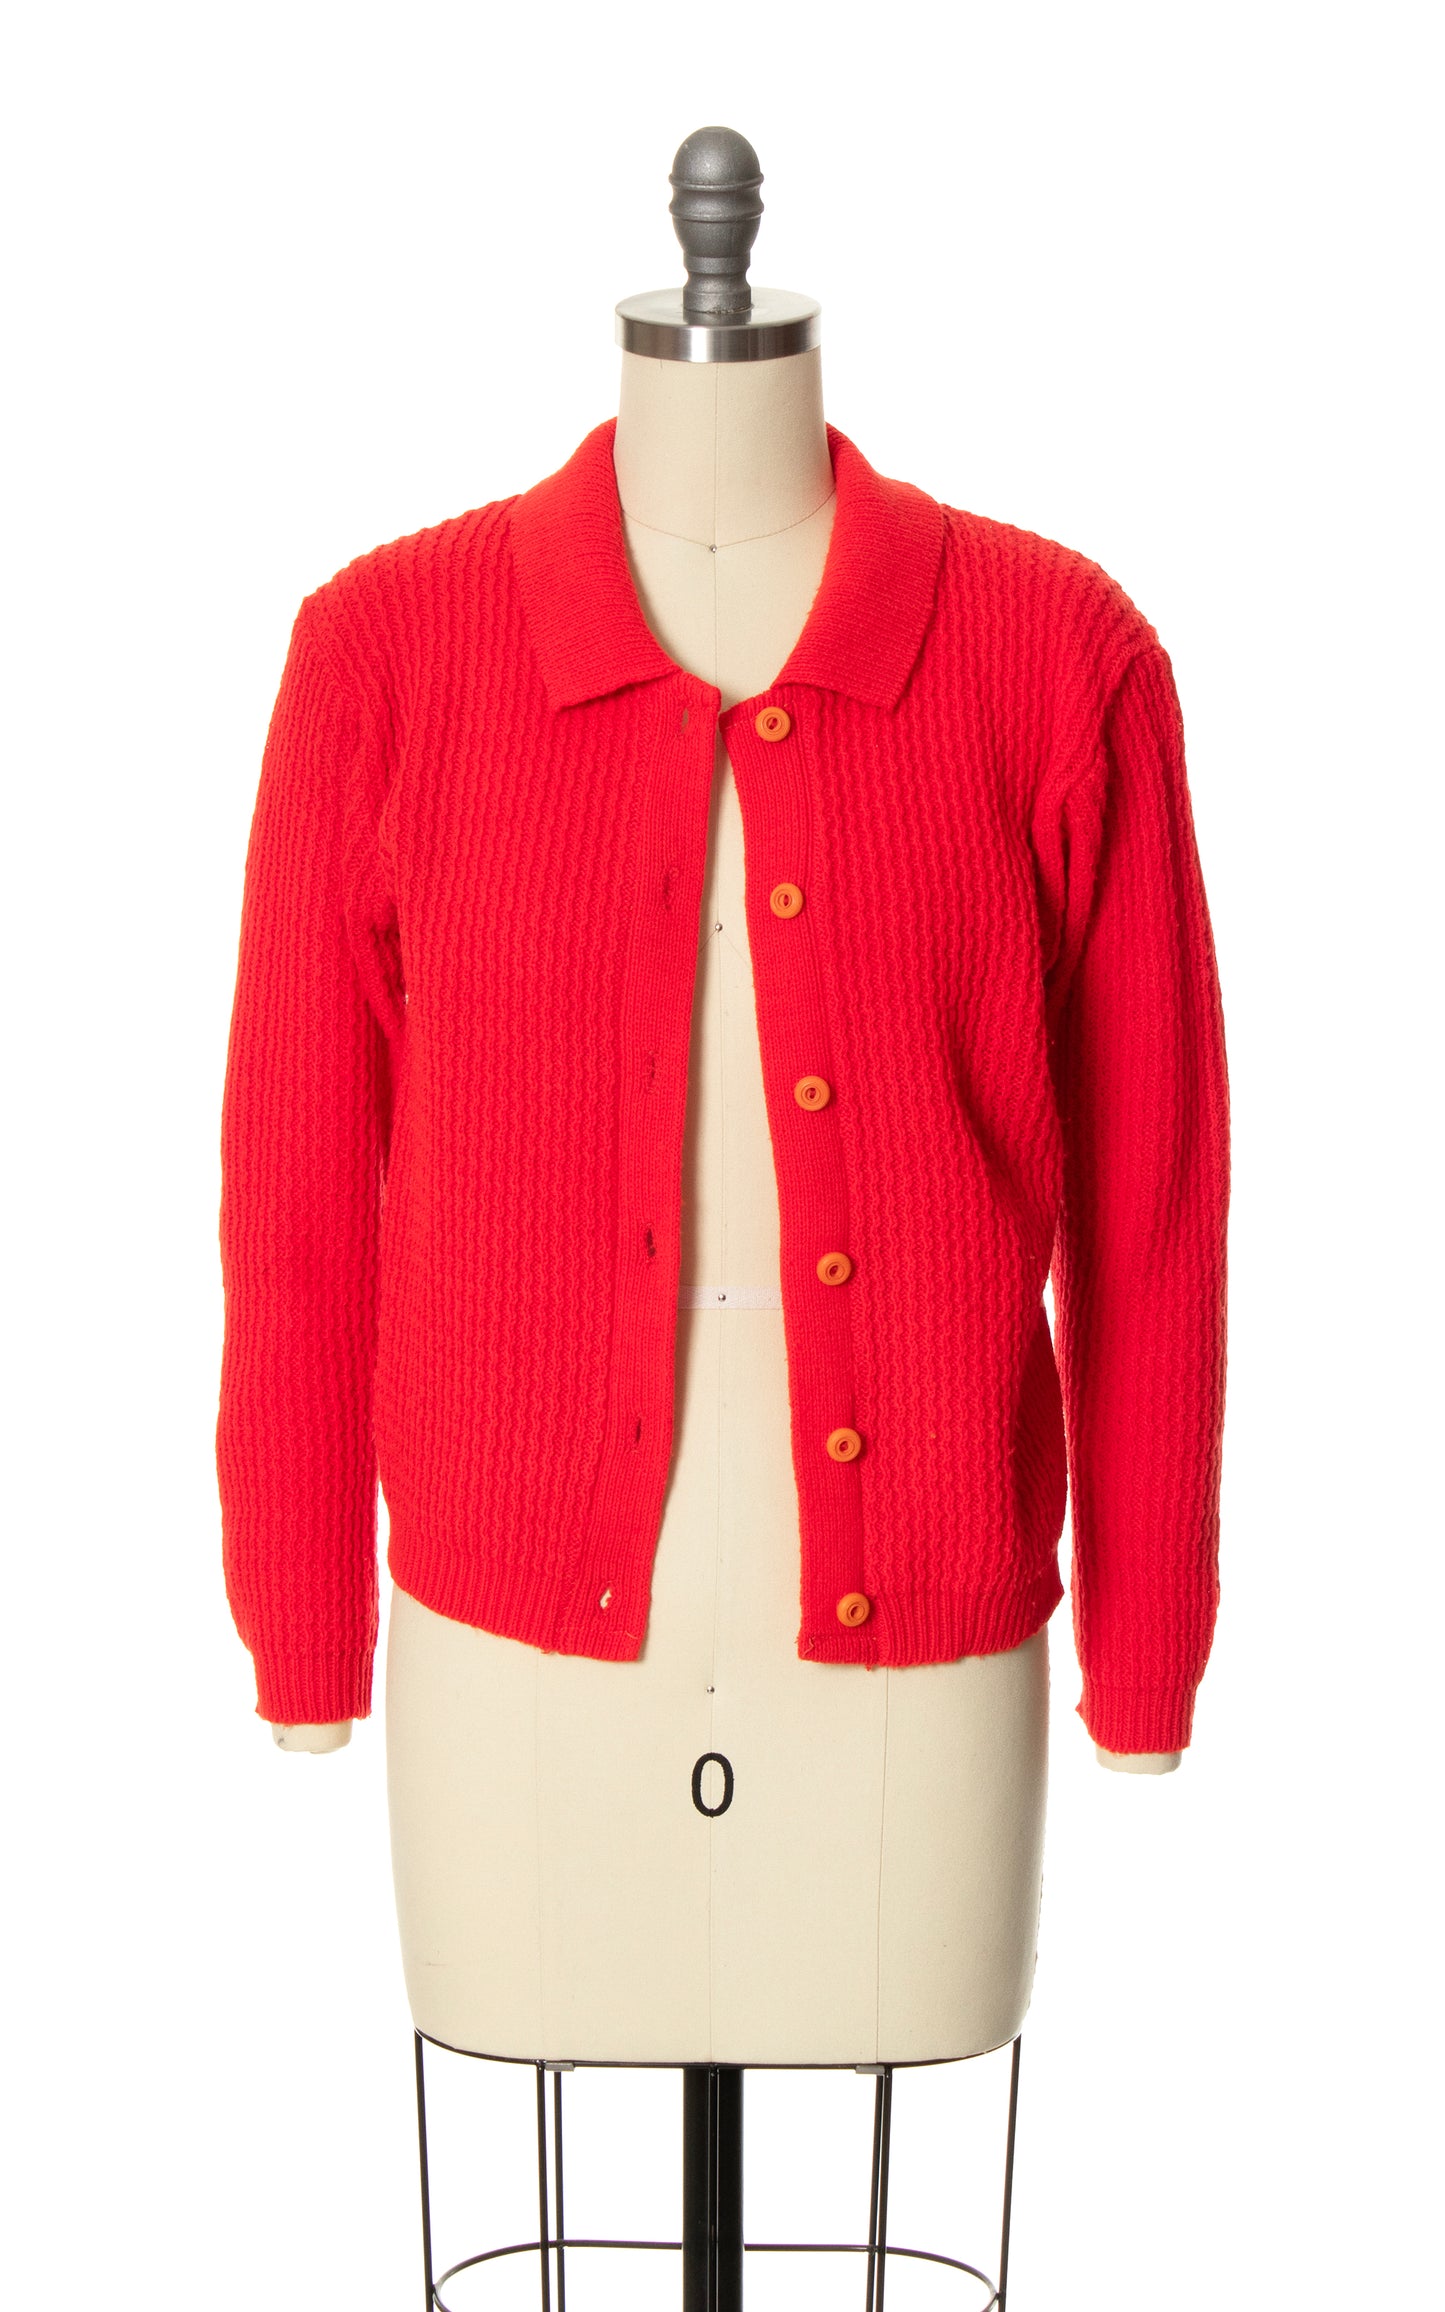 Vintage 60s 1960s Bright Red Knit Cardigan Acrylic Sweater BirthdayLifeVintage